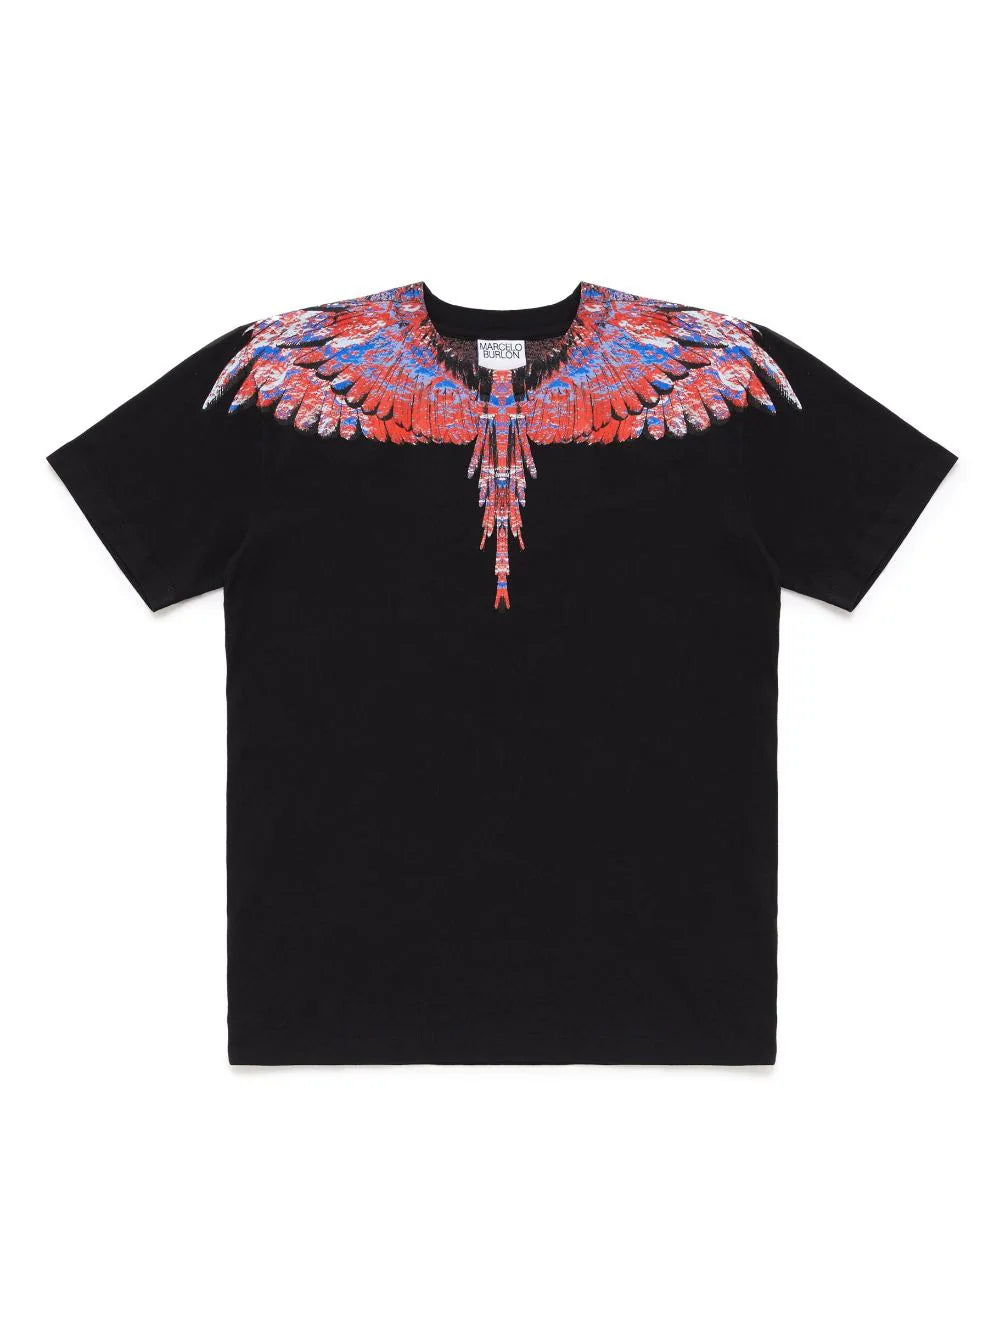 Lunar Wings cotton T-shirt